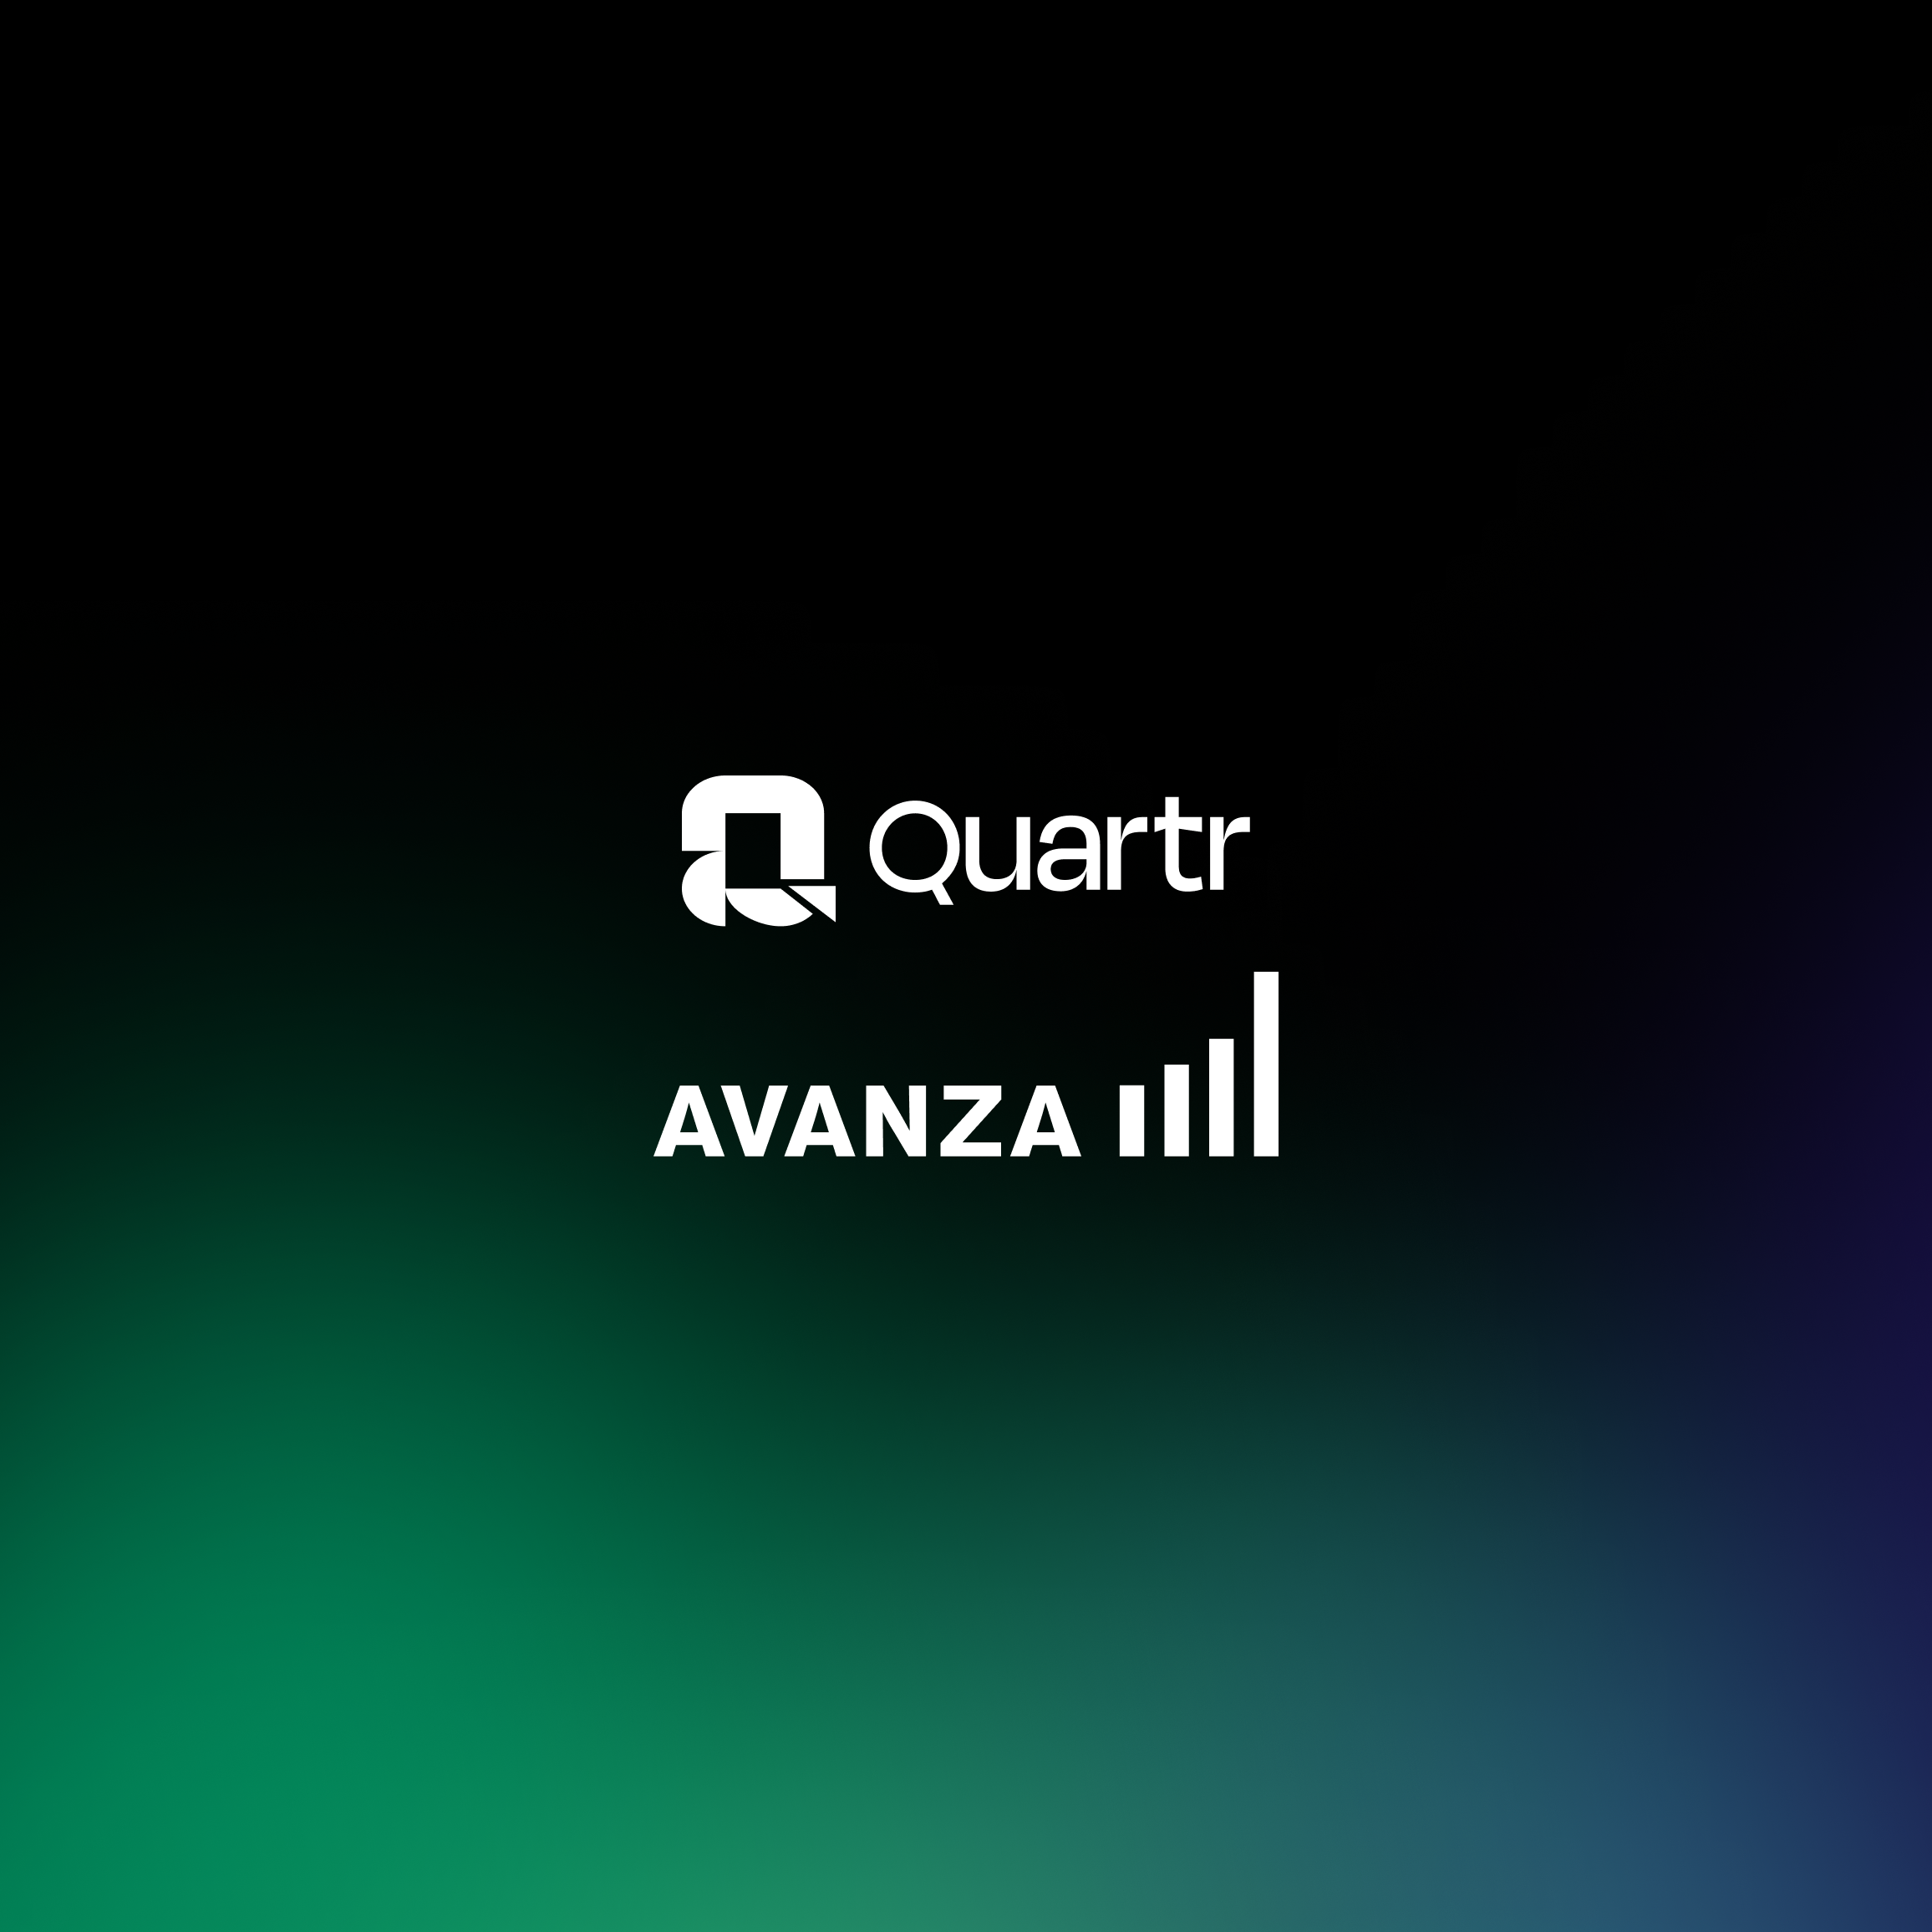 Quartr and Avanza logos